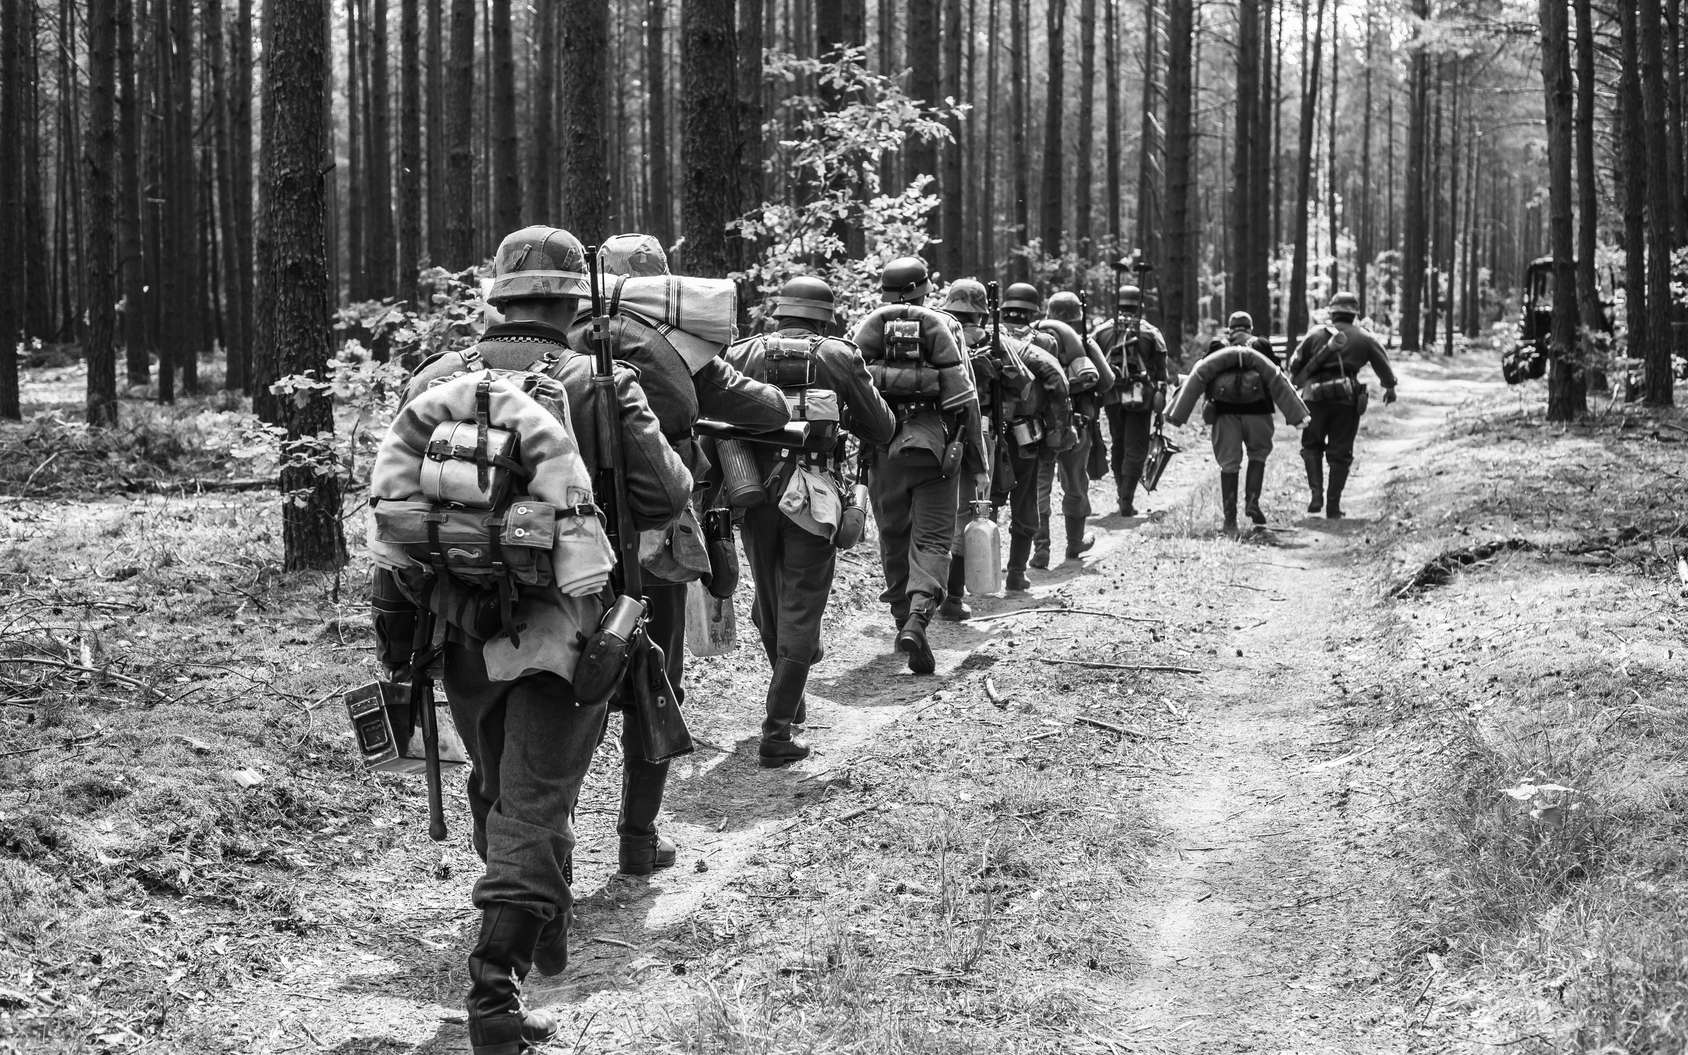 Soldats allemands durant la seconde guerre mondiale. © Grigory Bruev, fotolia